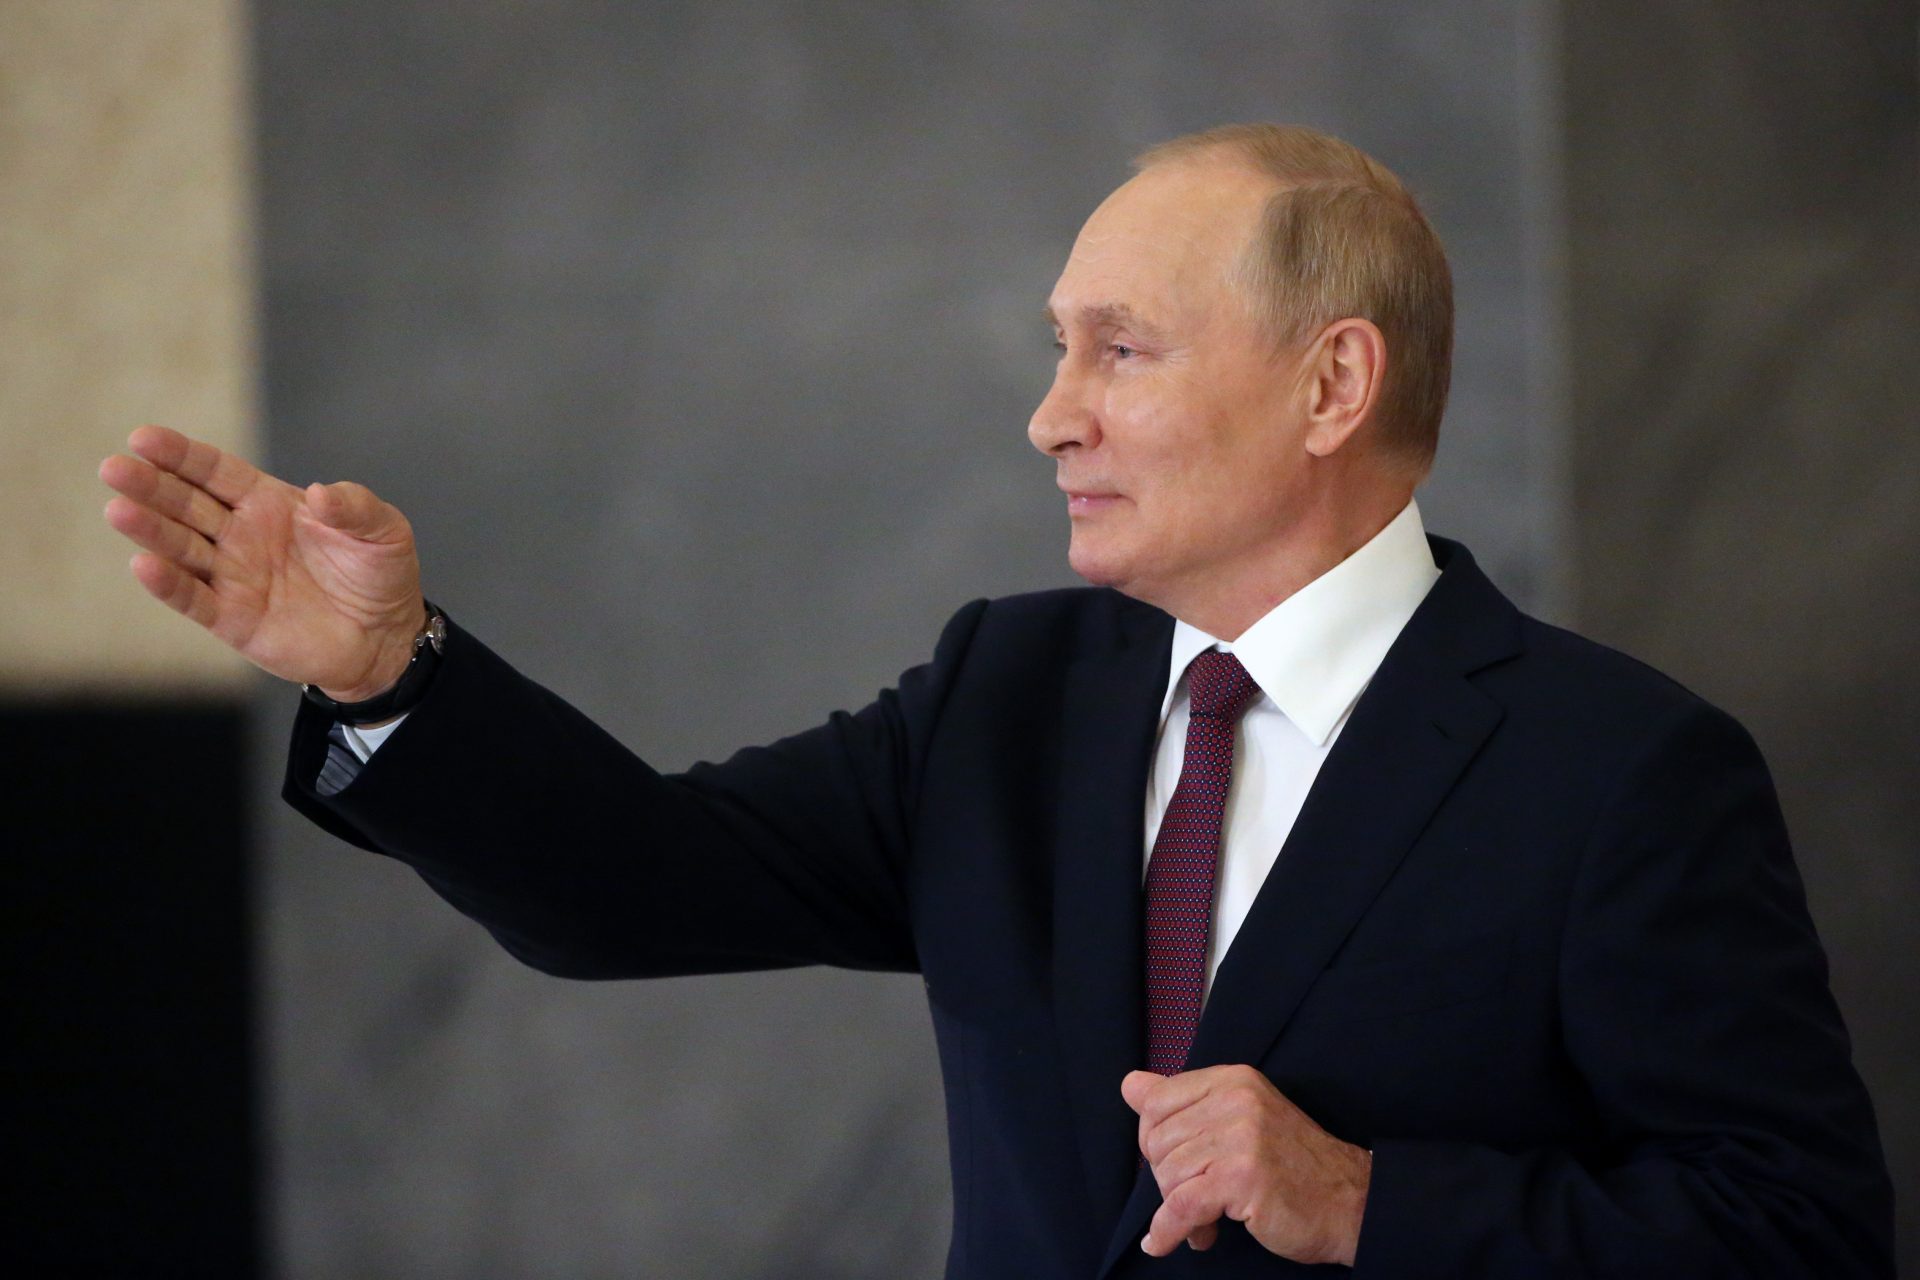 Putin's power move in international politics is making world leaders wait